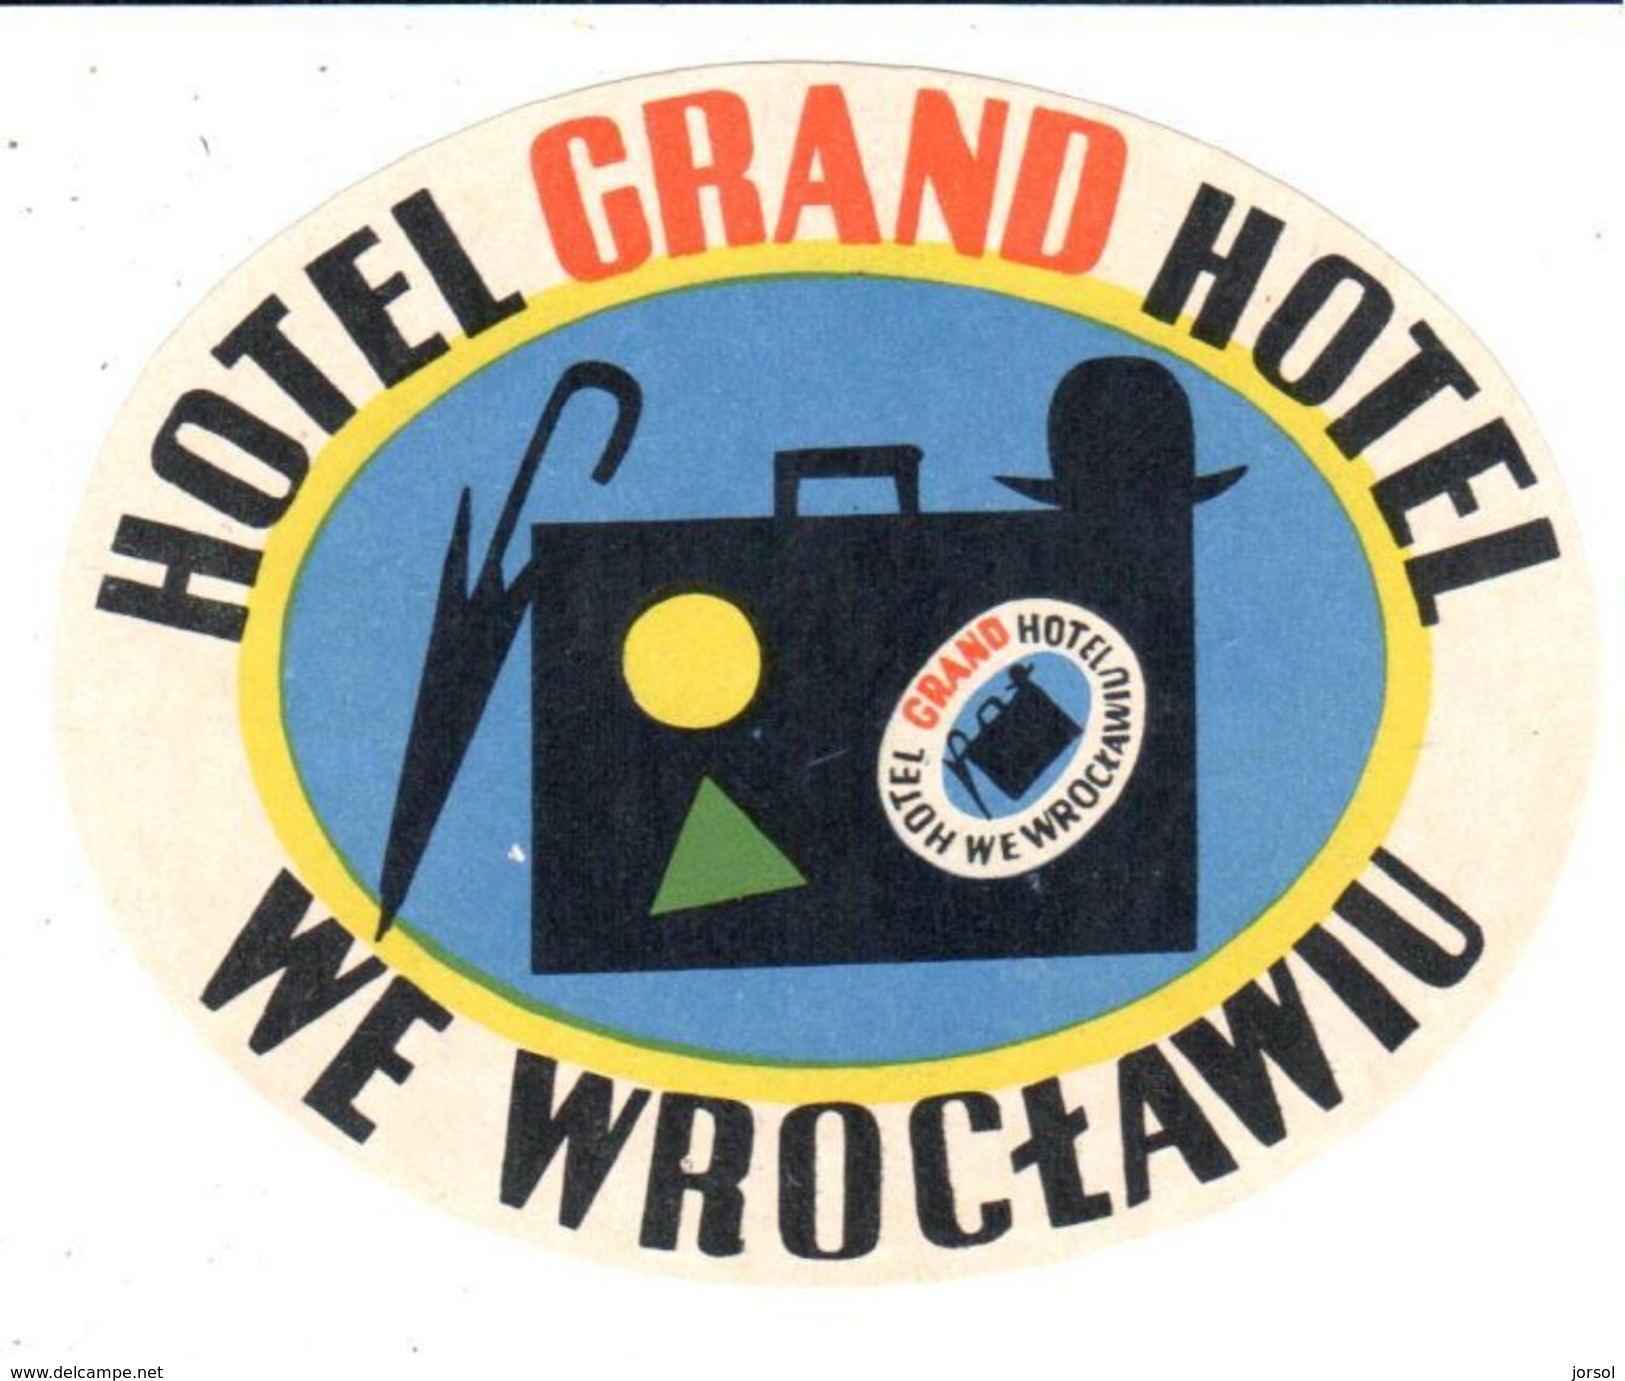 ,ETIQUETA DE HOTEL  - HOTEL GRAND HOTEL  -WE WROCLAWIU  -POLONIA - Hotel Labels